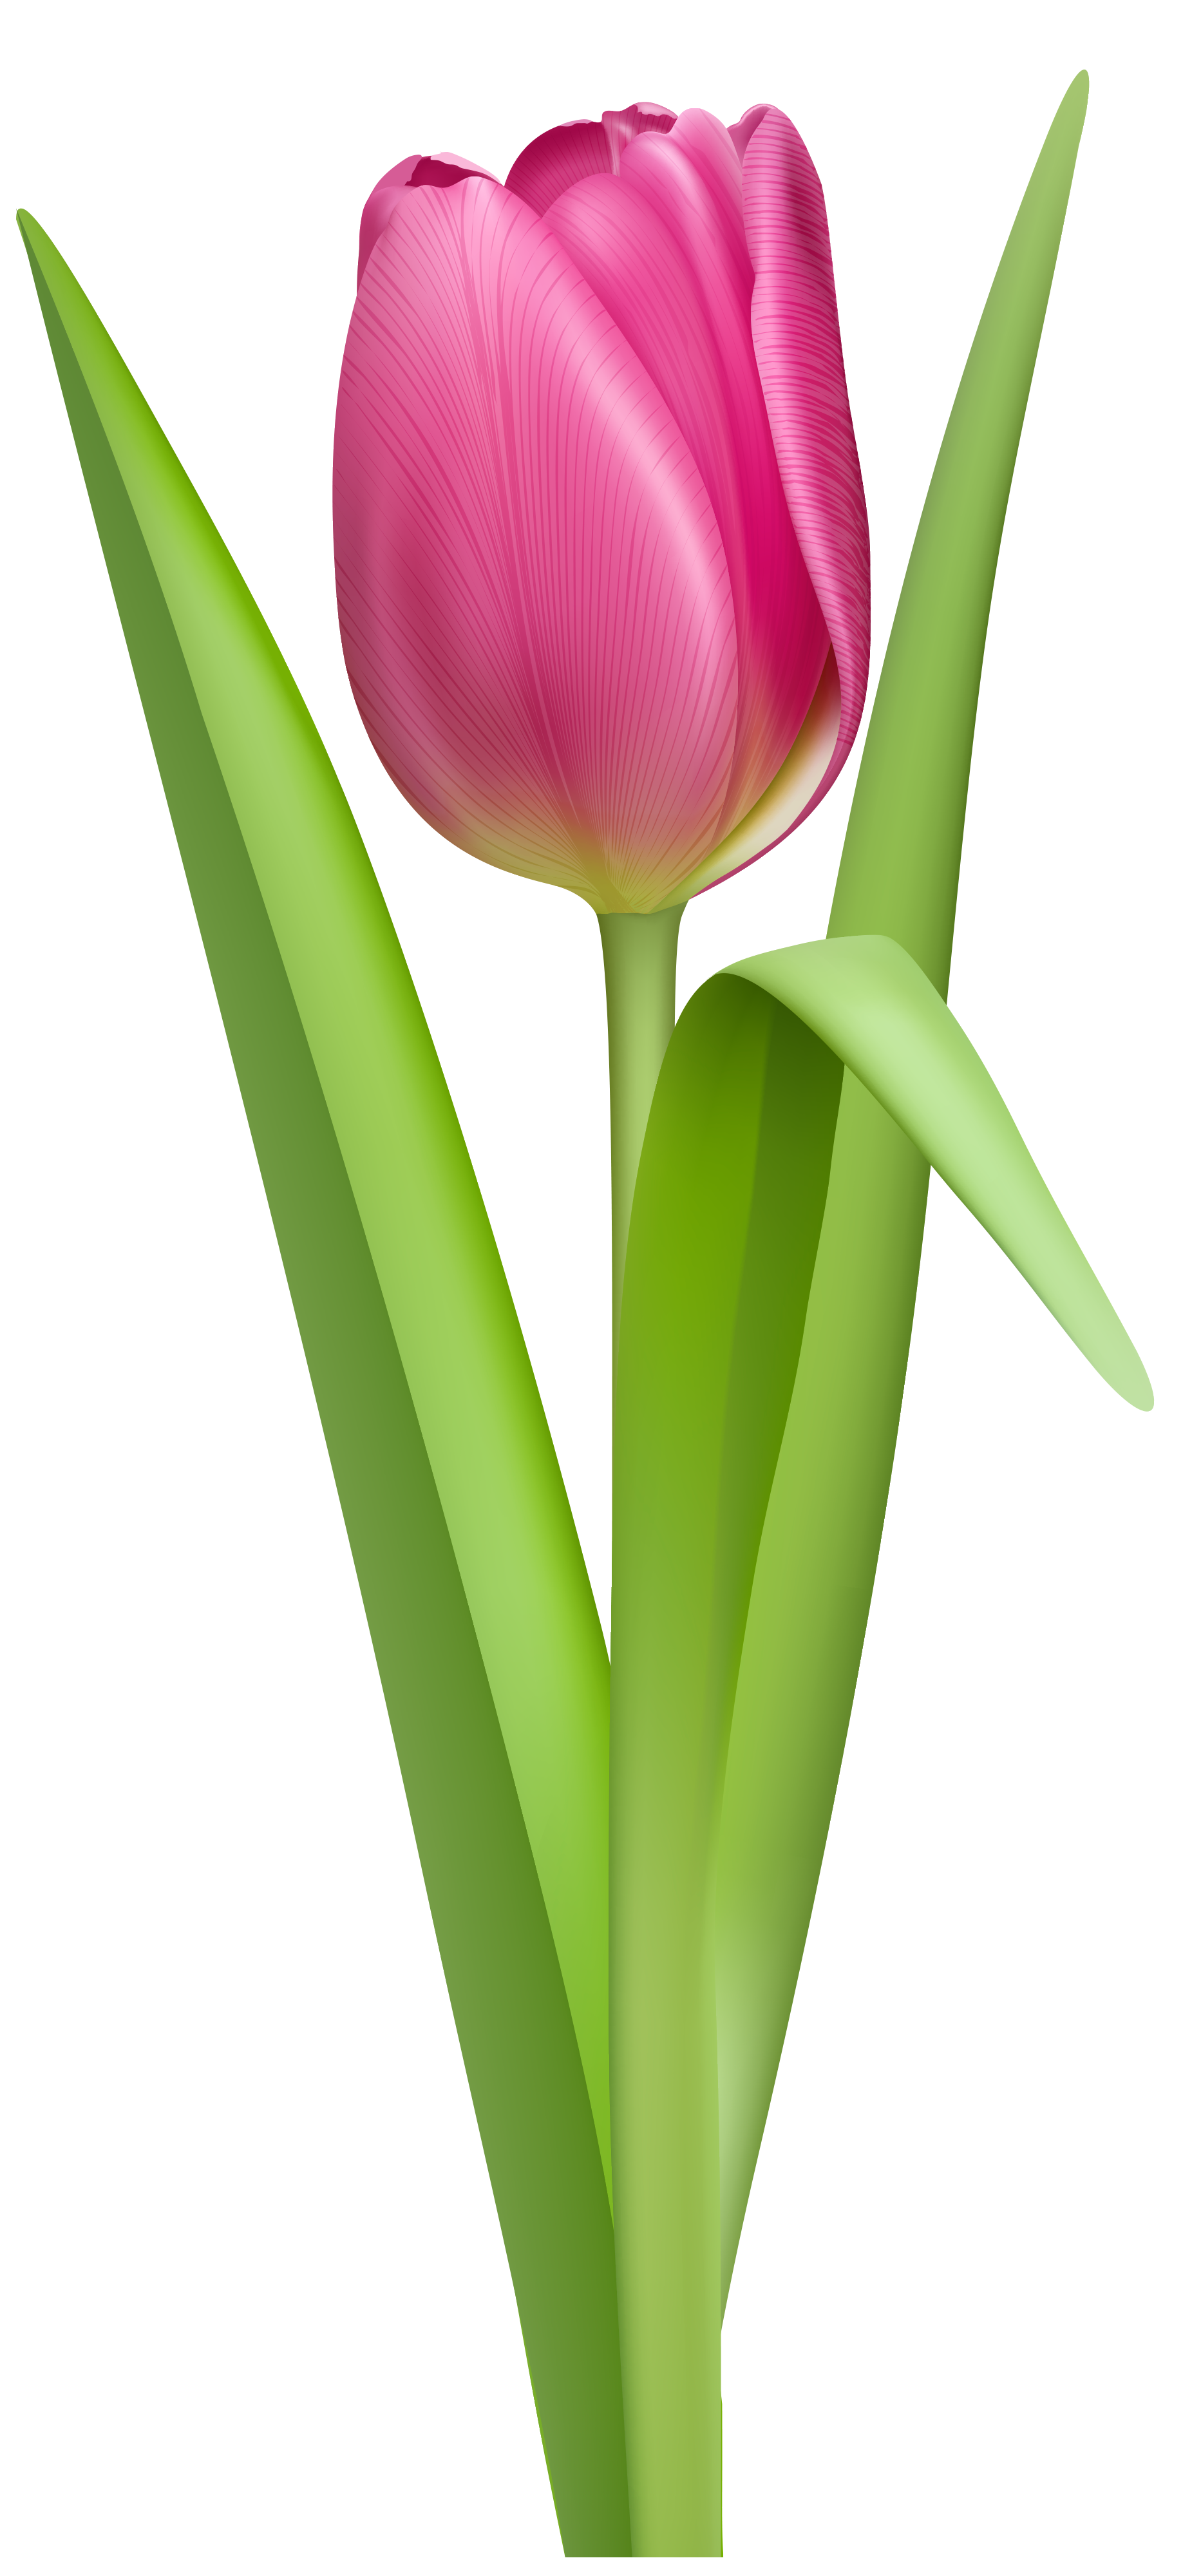 Pink tulips photo